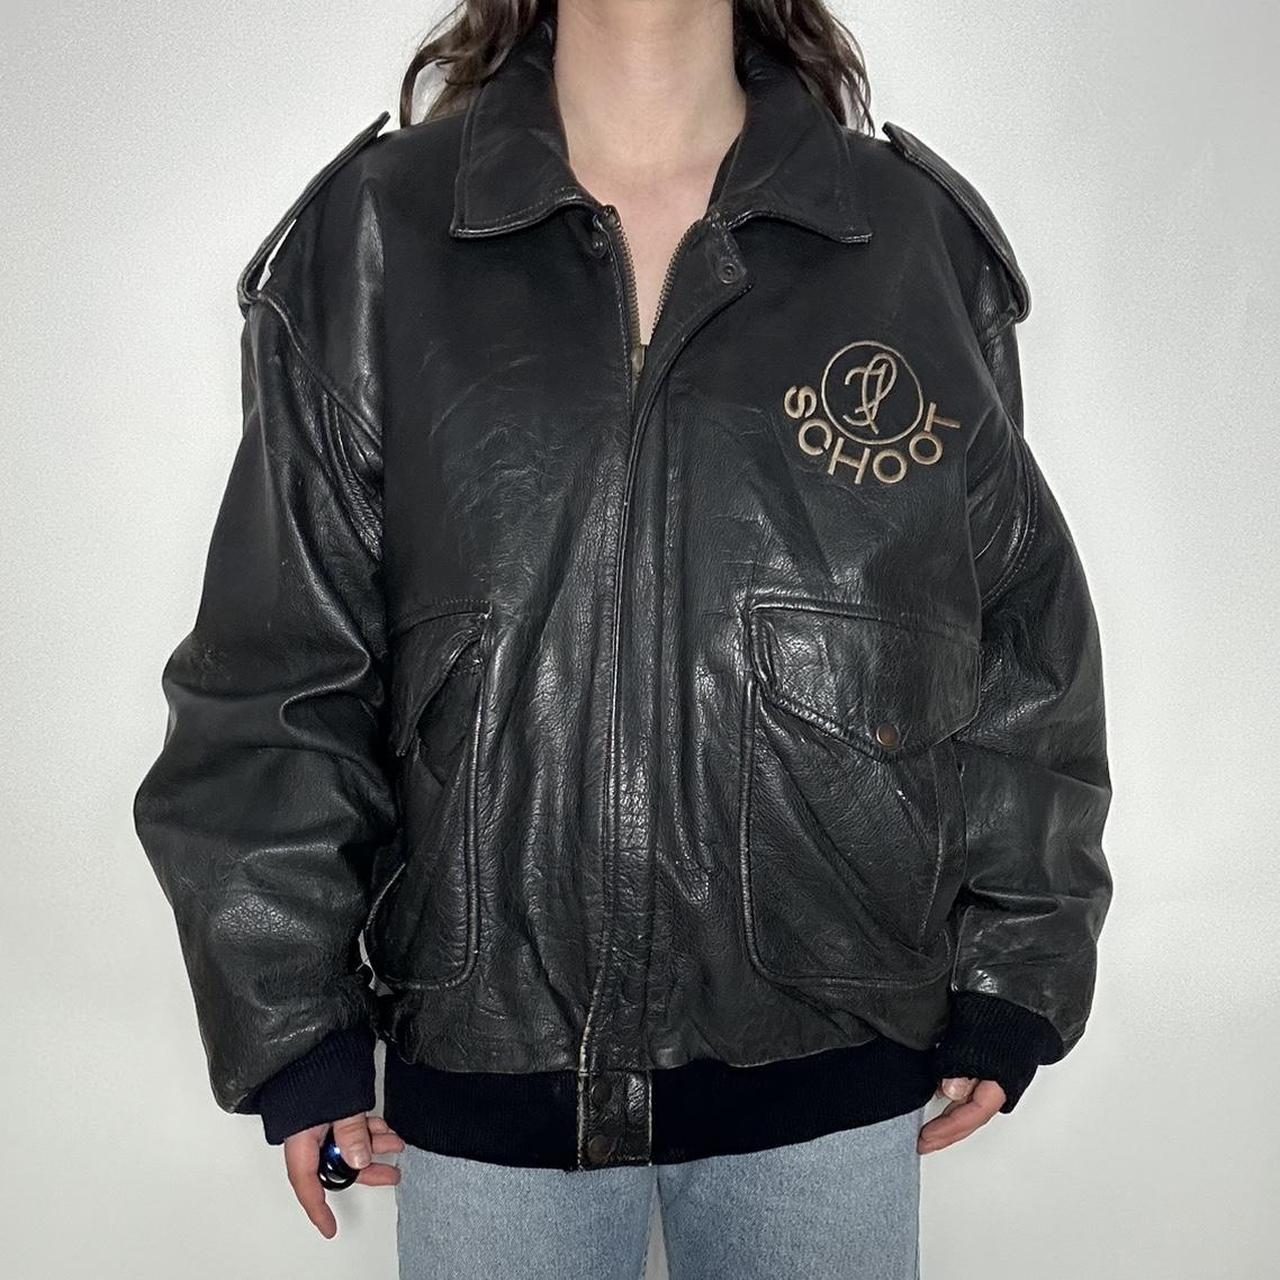 Vintage 90s leather bomber flying jacket